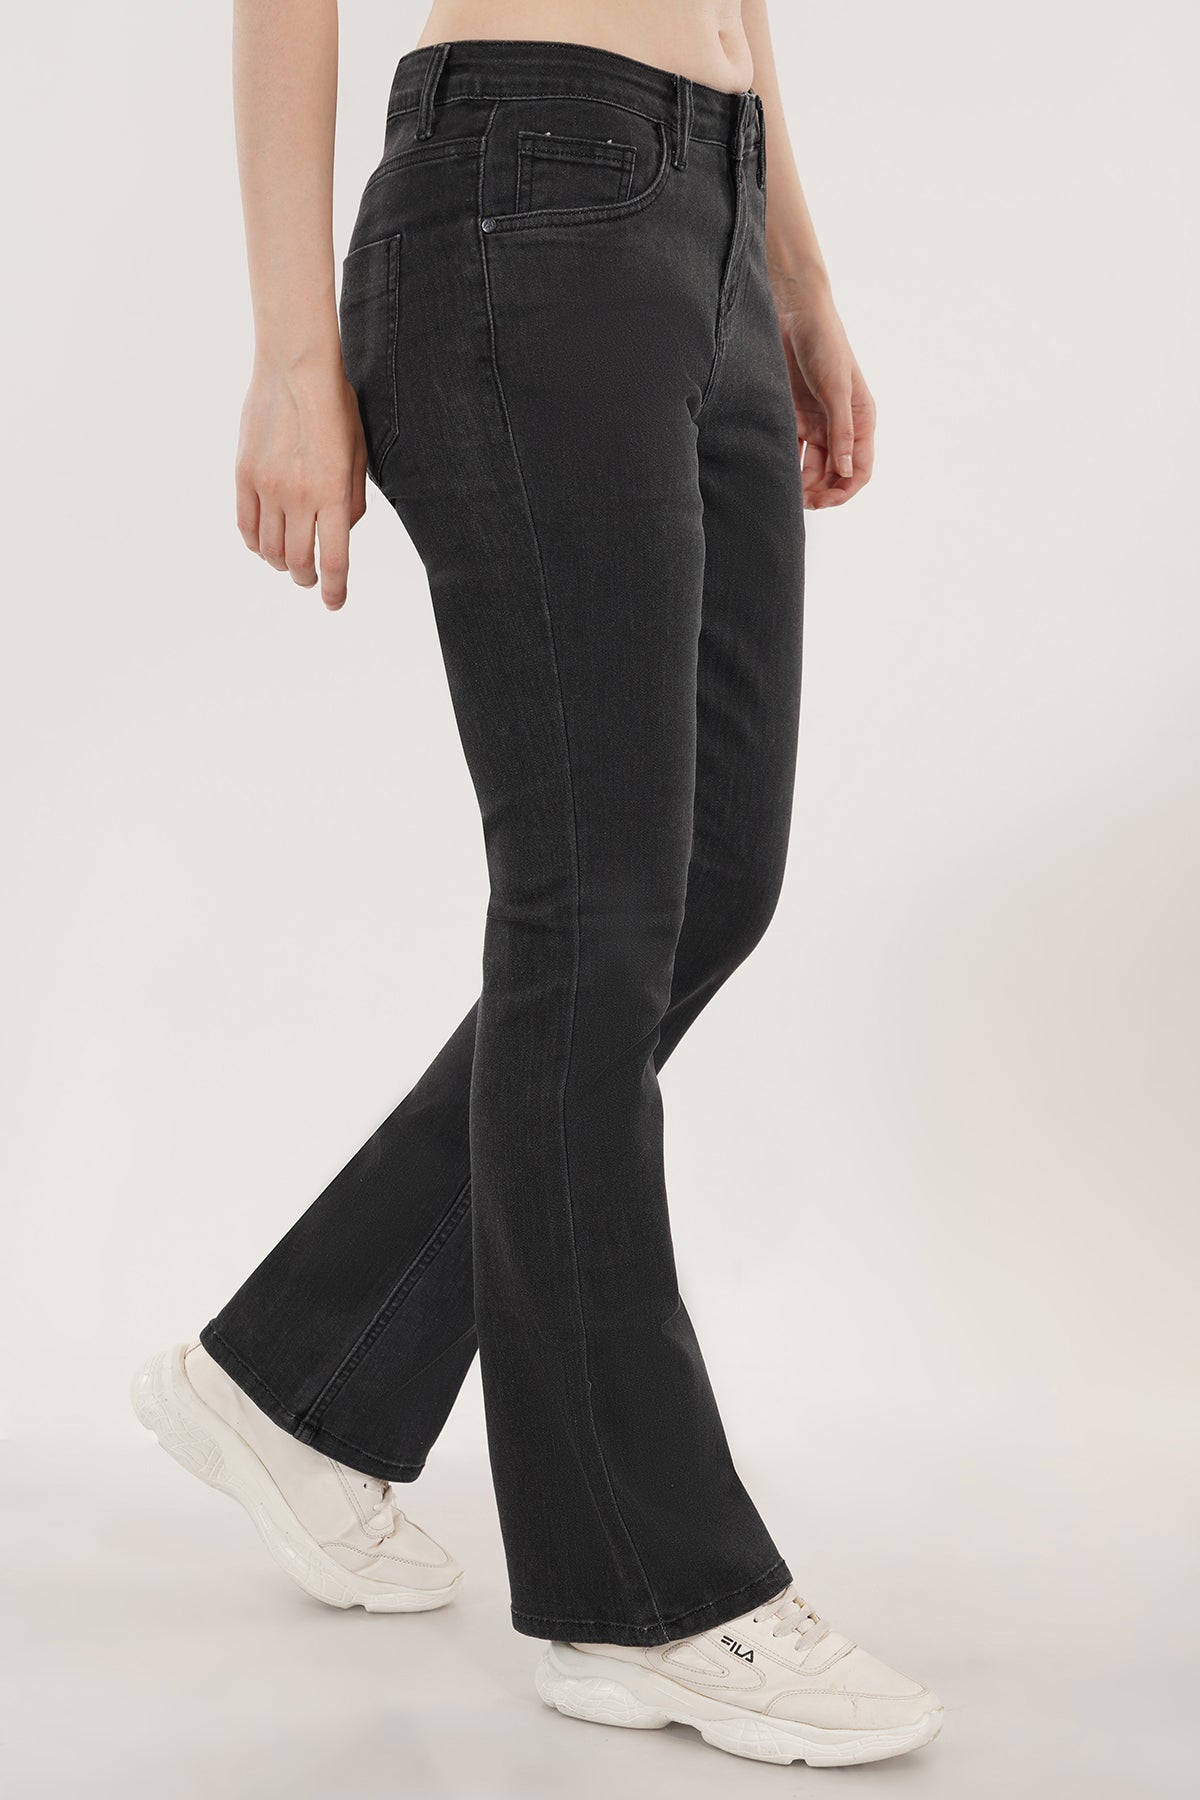 Women's Retro Black Bootcut Jeans